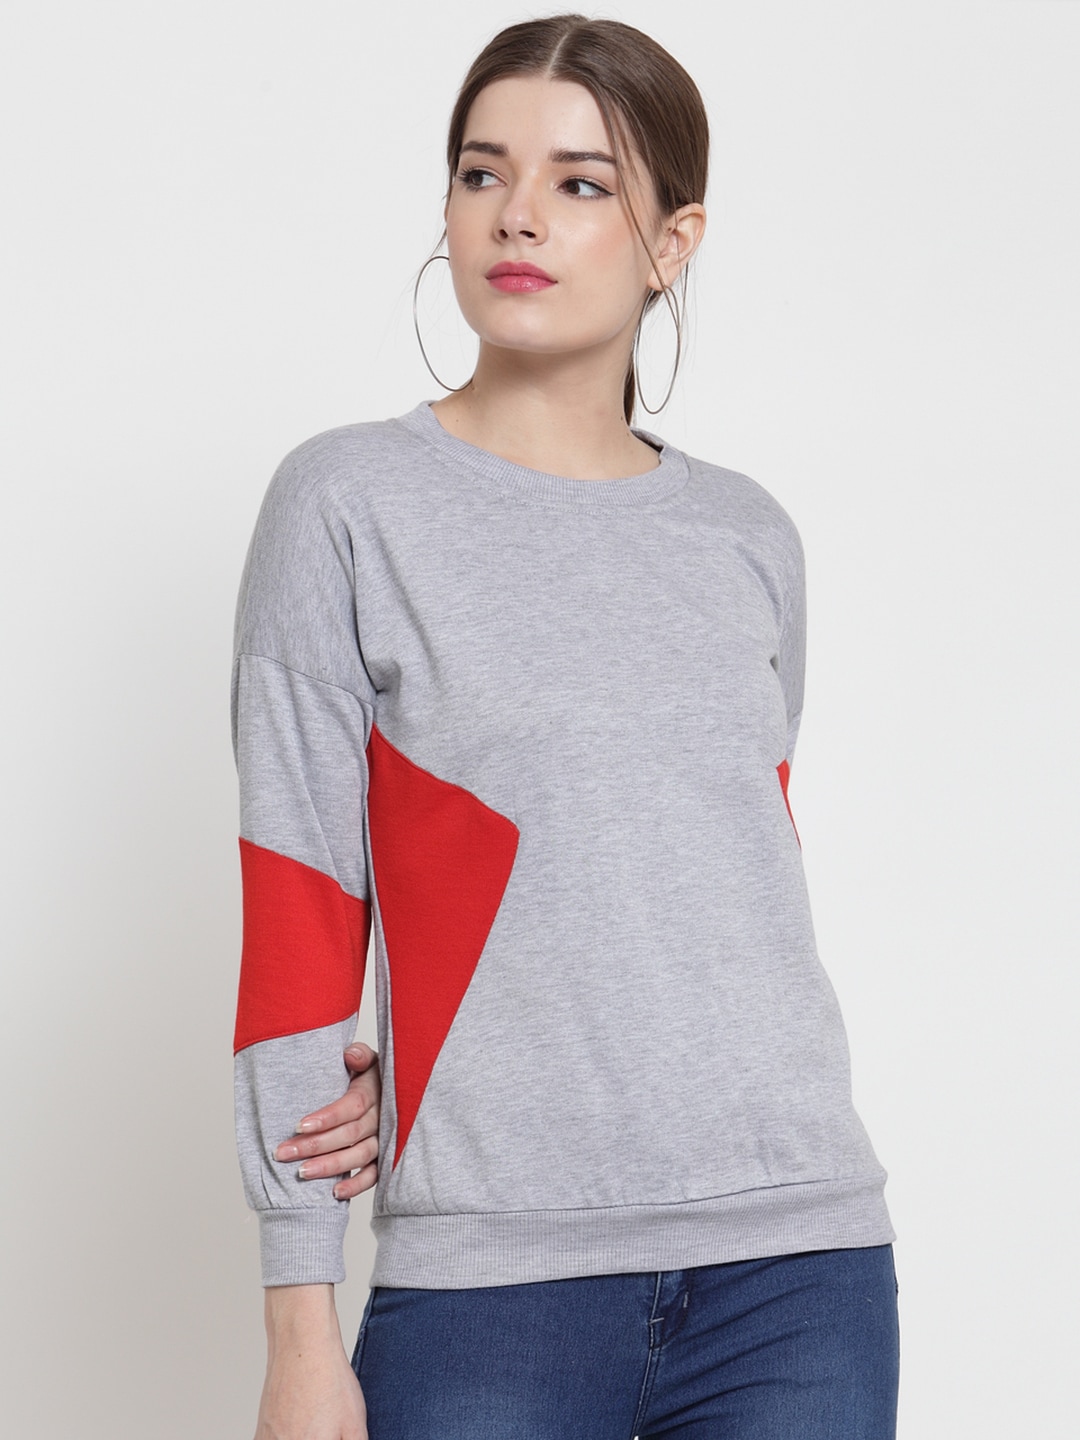 Belle Fille Women Grey Melange & Red Colourblocked Sweatshirt Price in India